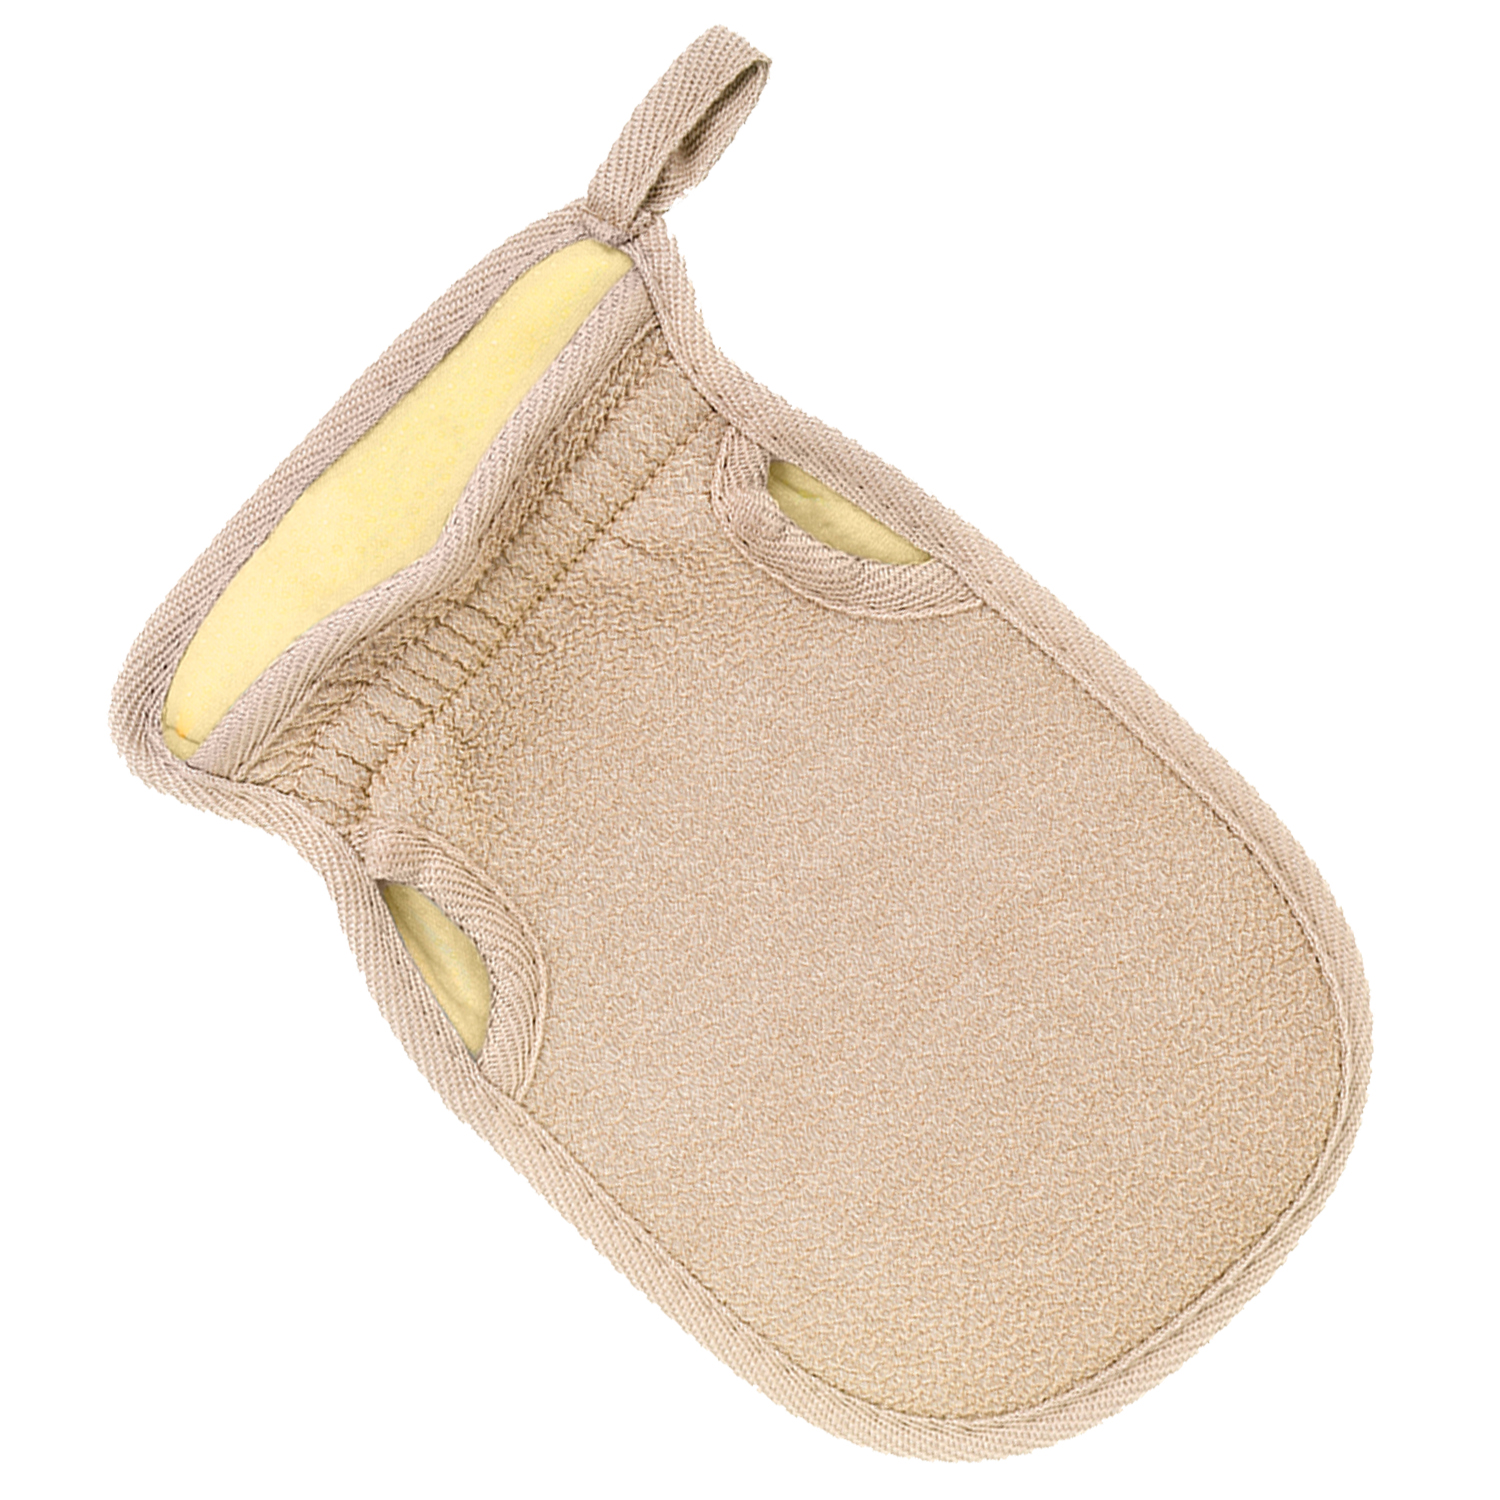 Мочалка-рукавица, VenusShape, цвет песочный, 23х14 см york мочалка из люфы варежка